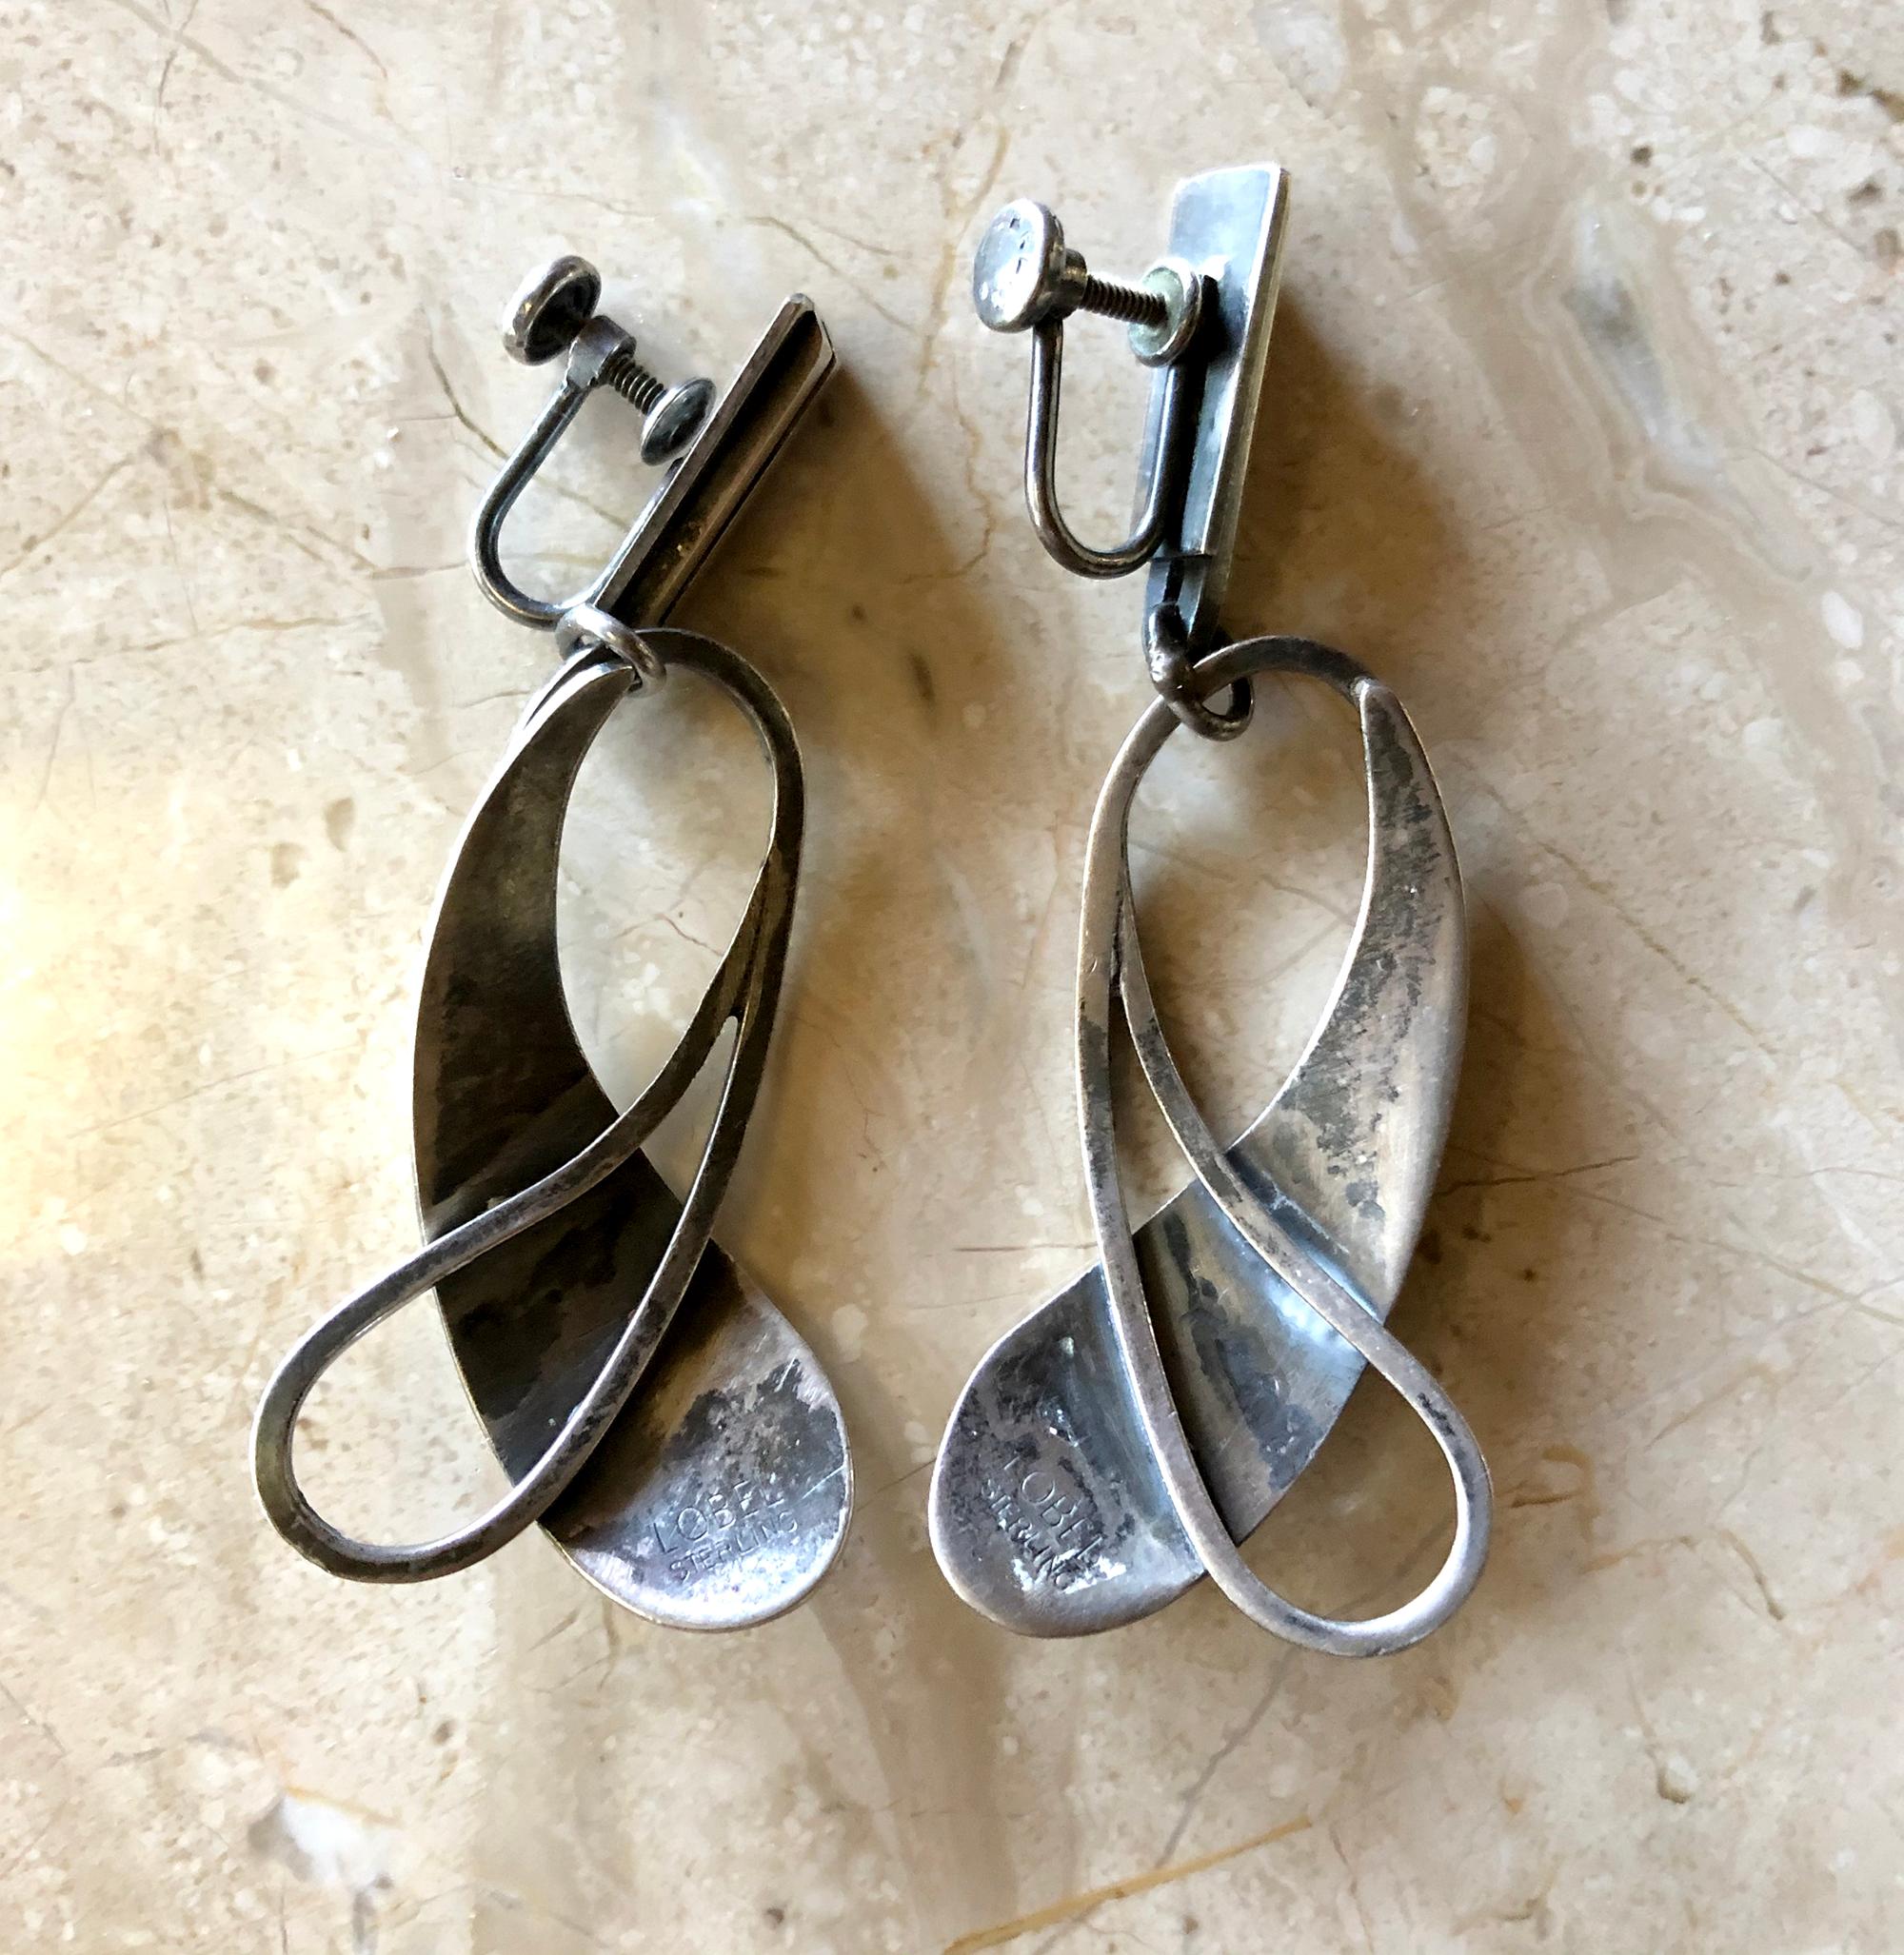 Sterling silver modernist screw back earrings created by Paul Lobel of New York, New York.  Earrings measure 2.5